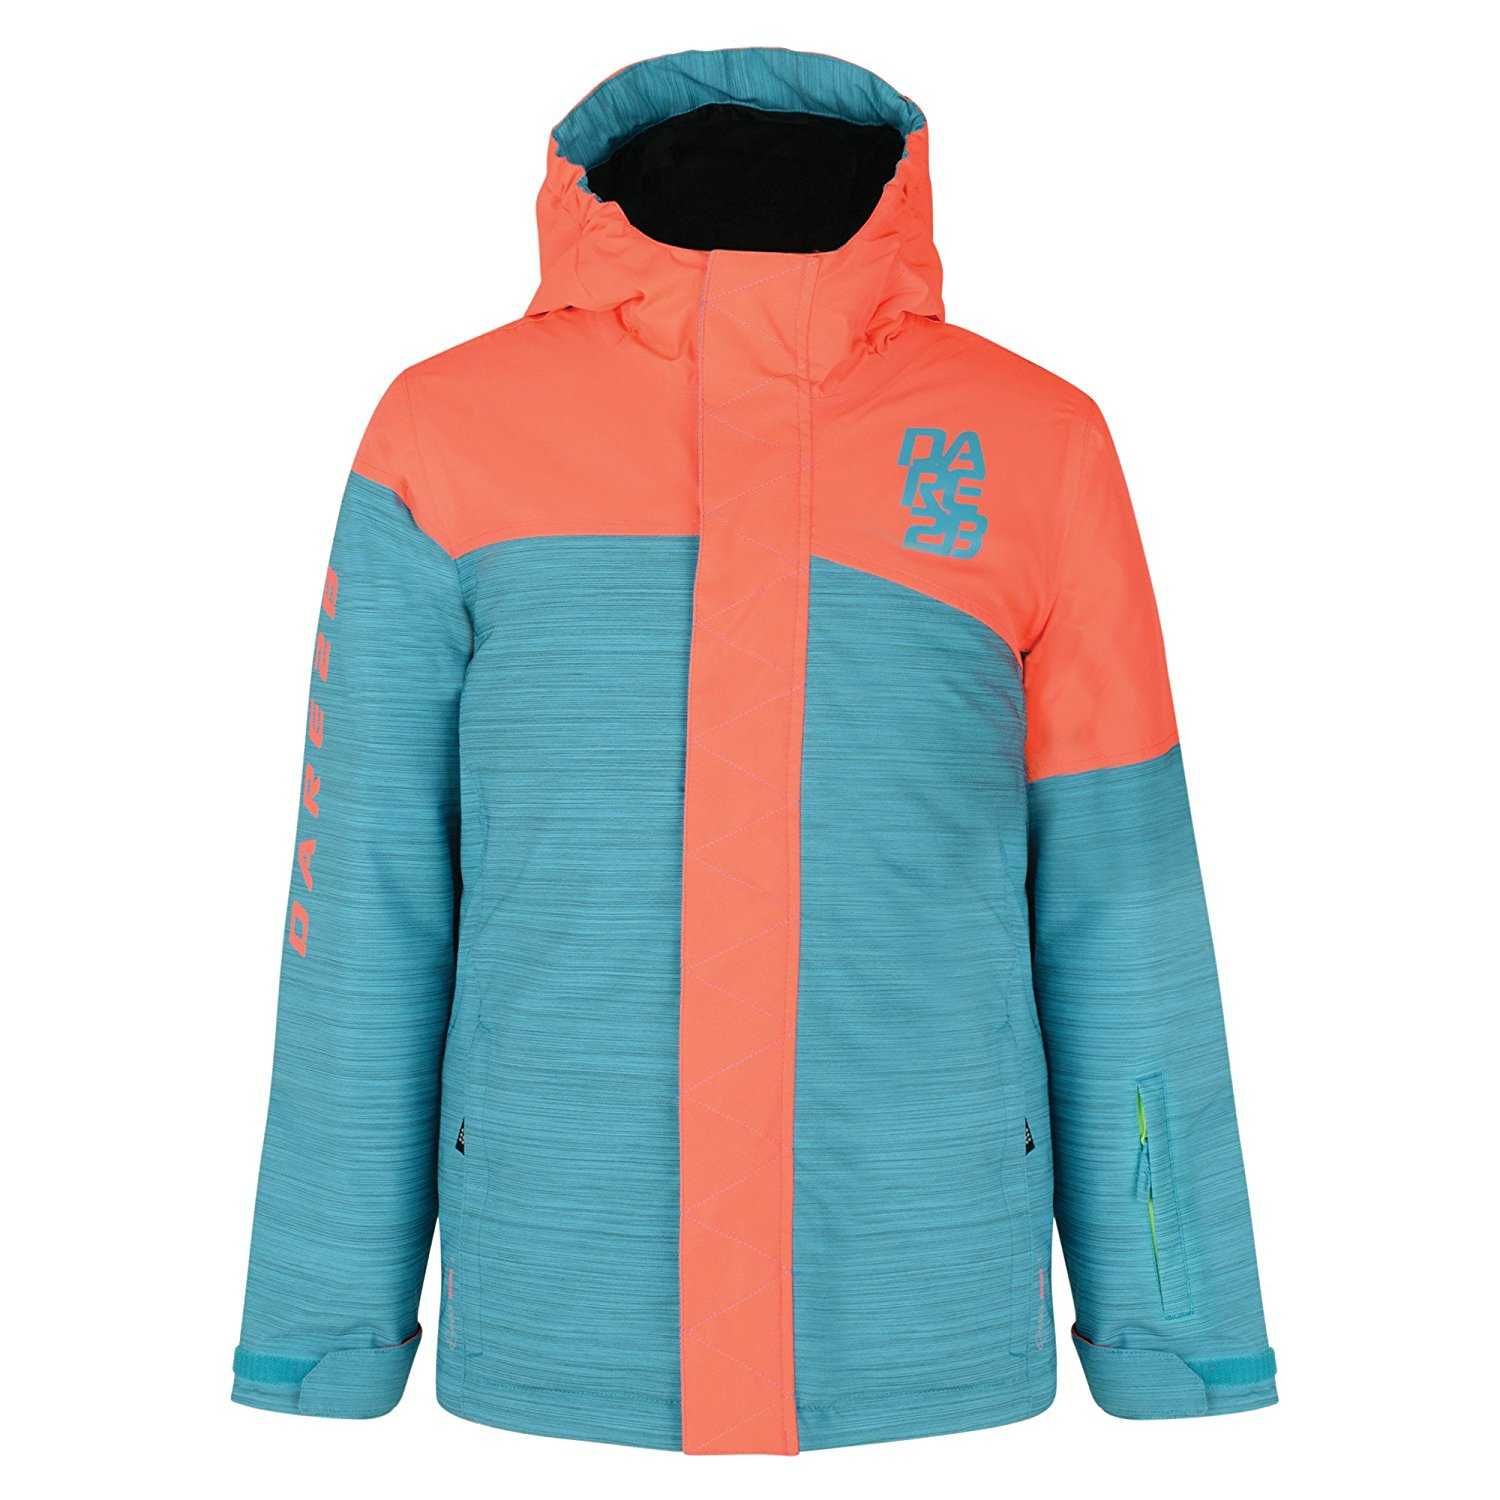 Veste de Ski Wiseguy Jacket - Aqua Blue Texture/ Fiery Coral